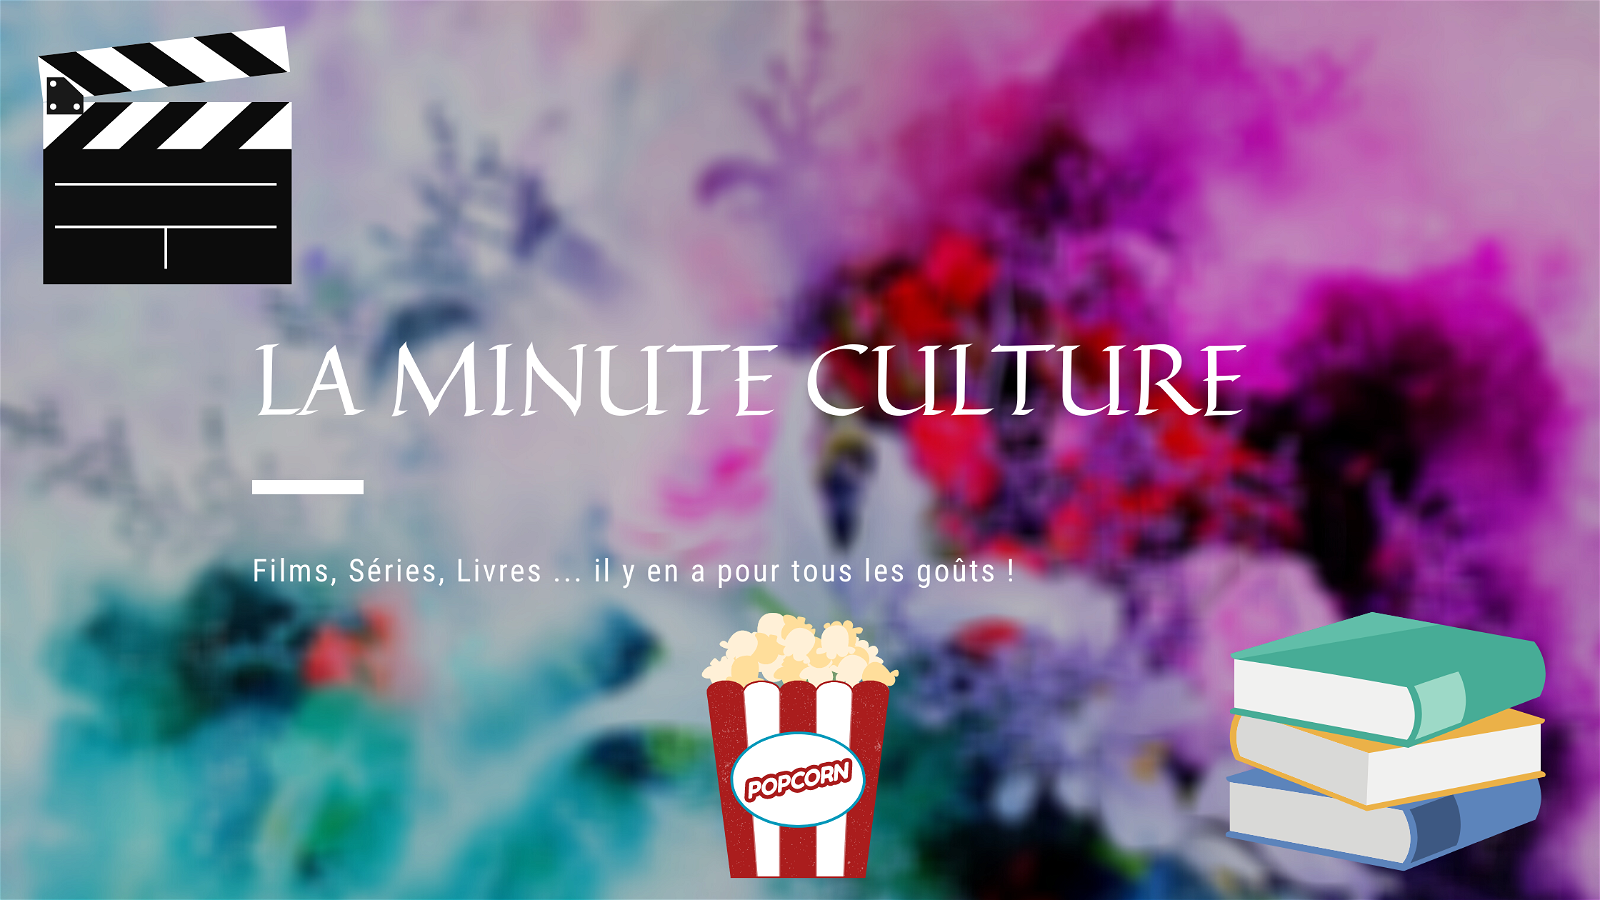 La minute culture - épisode 8